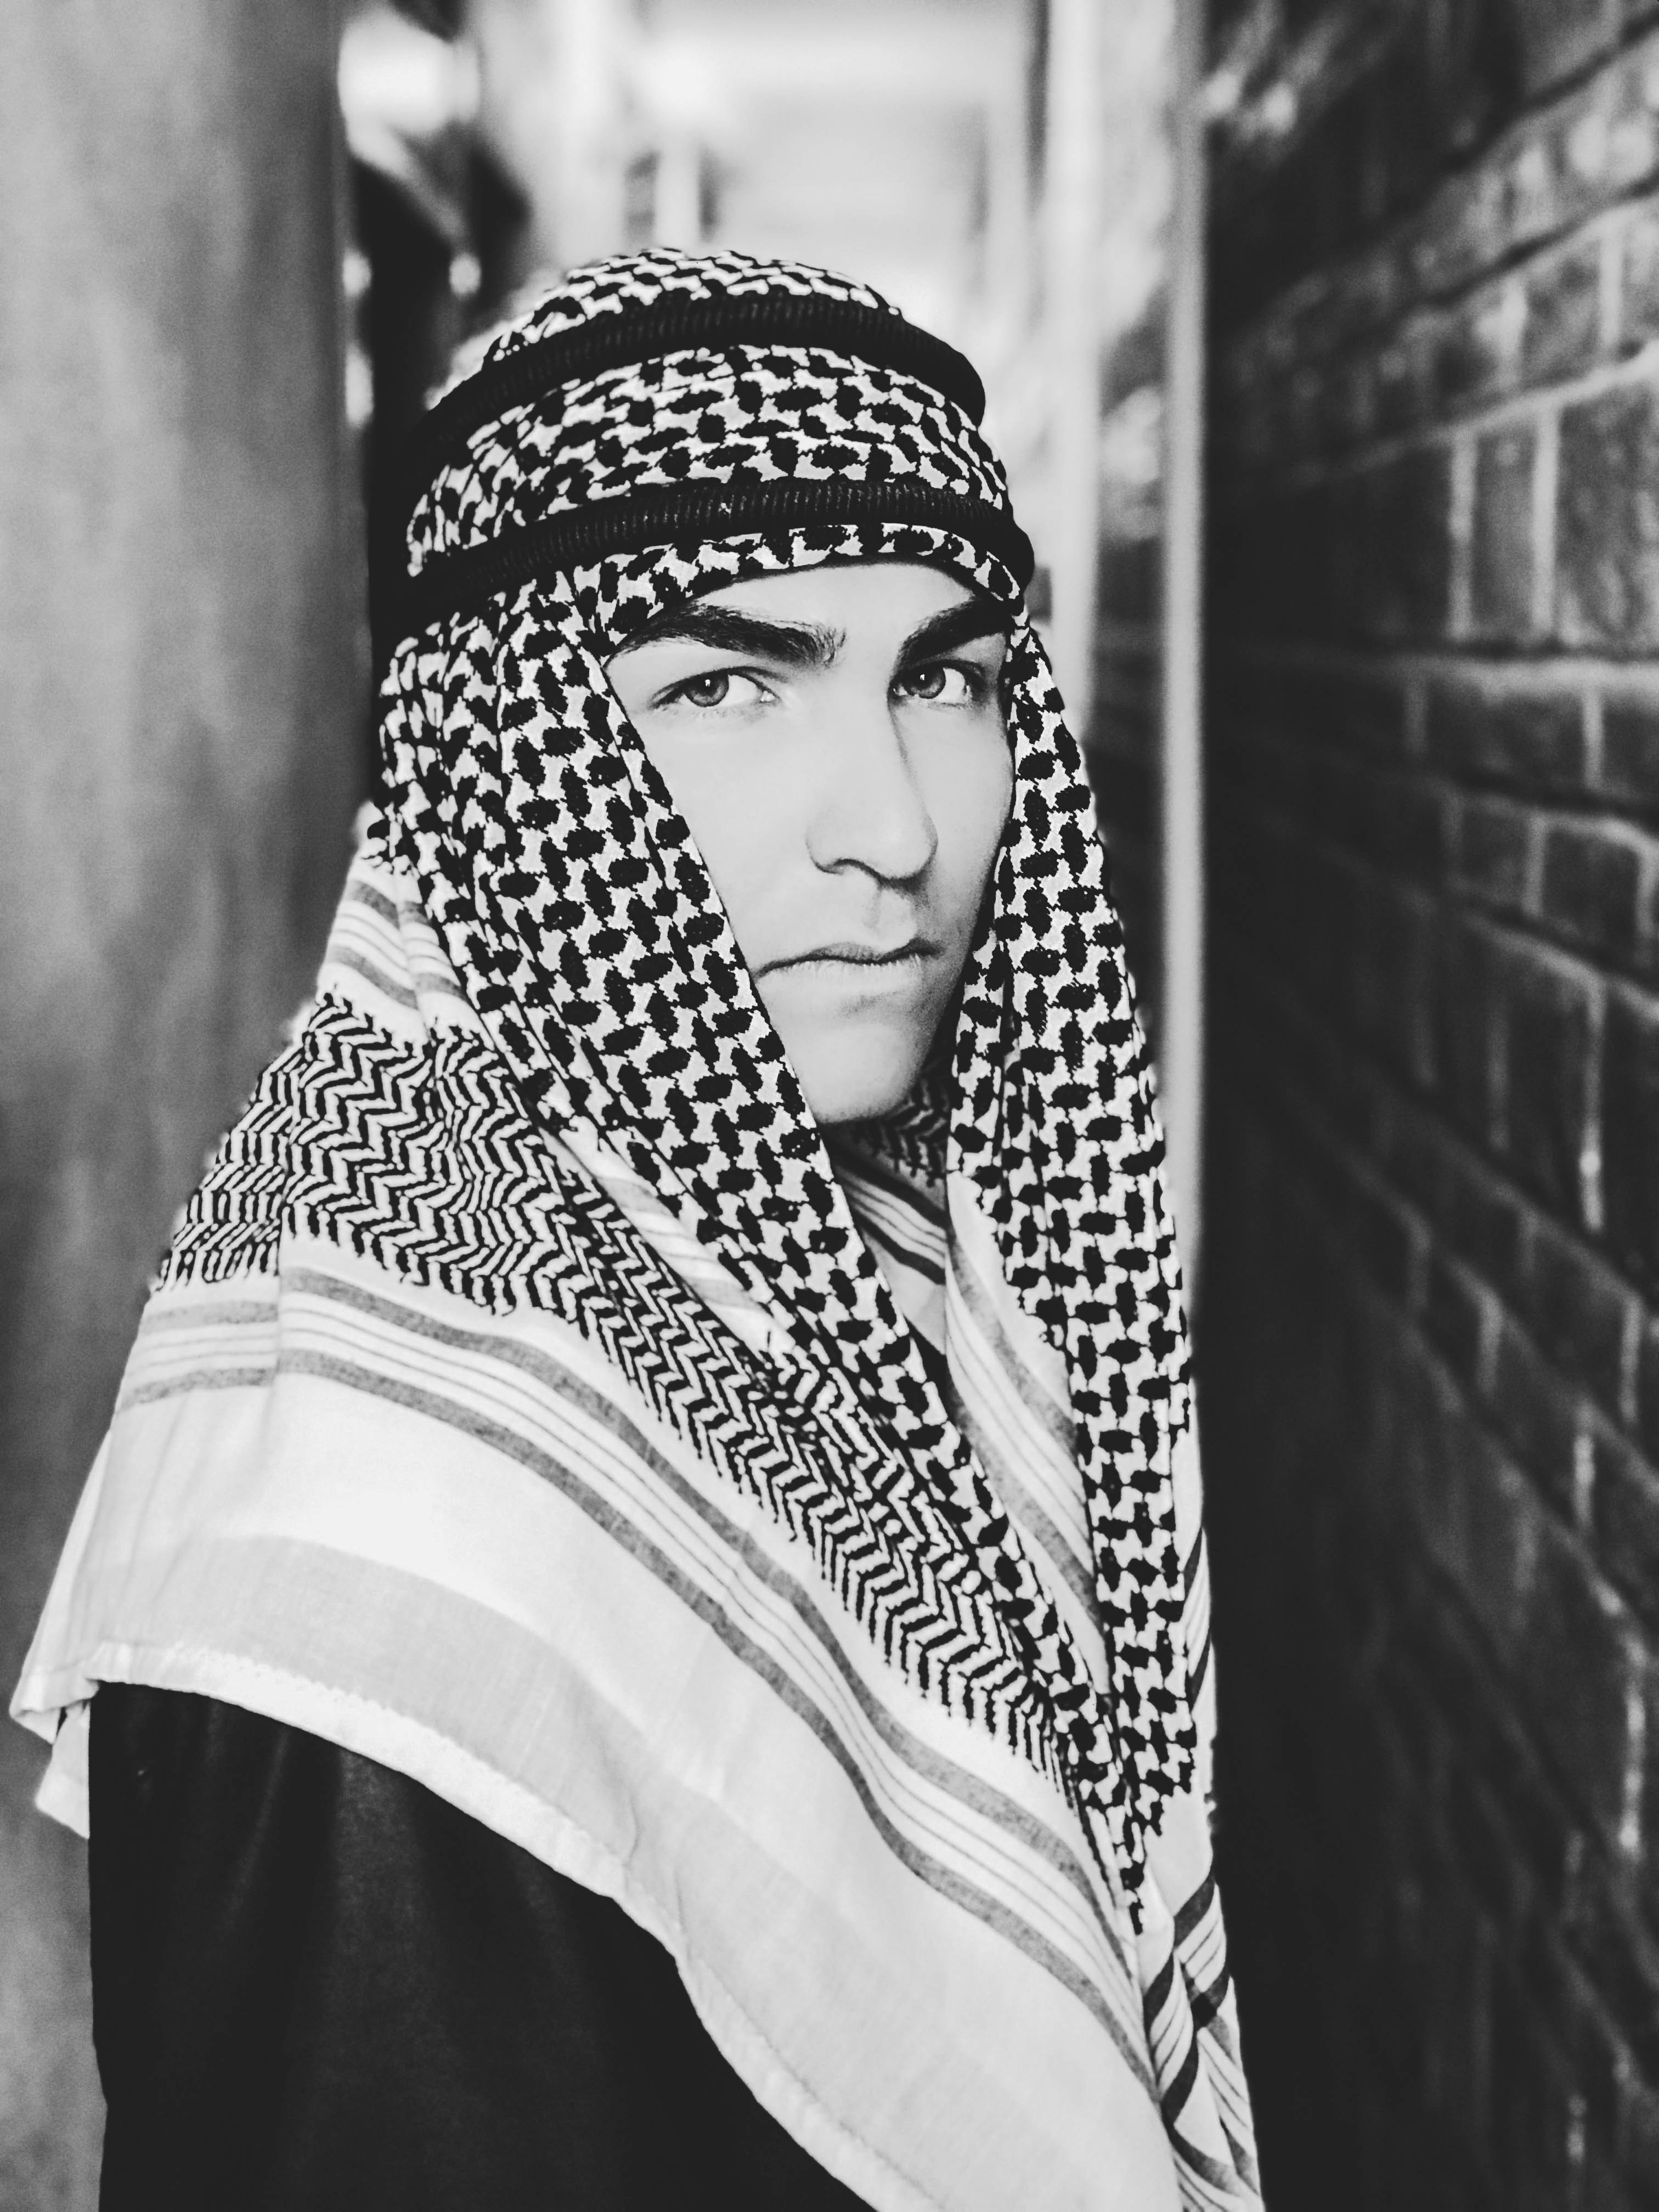 Grayscale photo of a man wearing keffiyeh